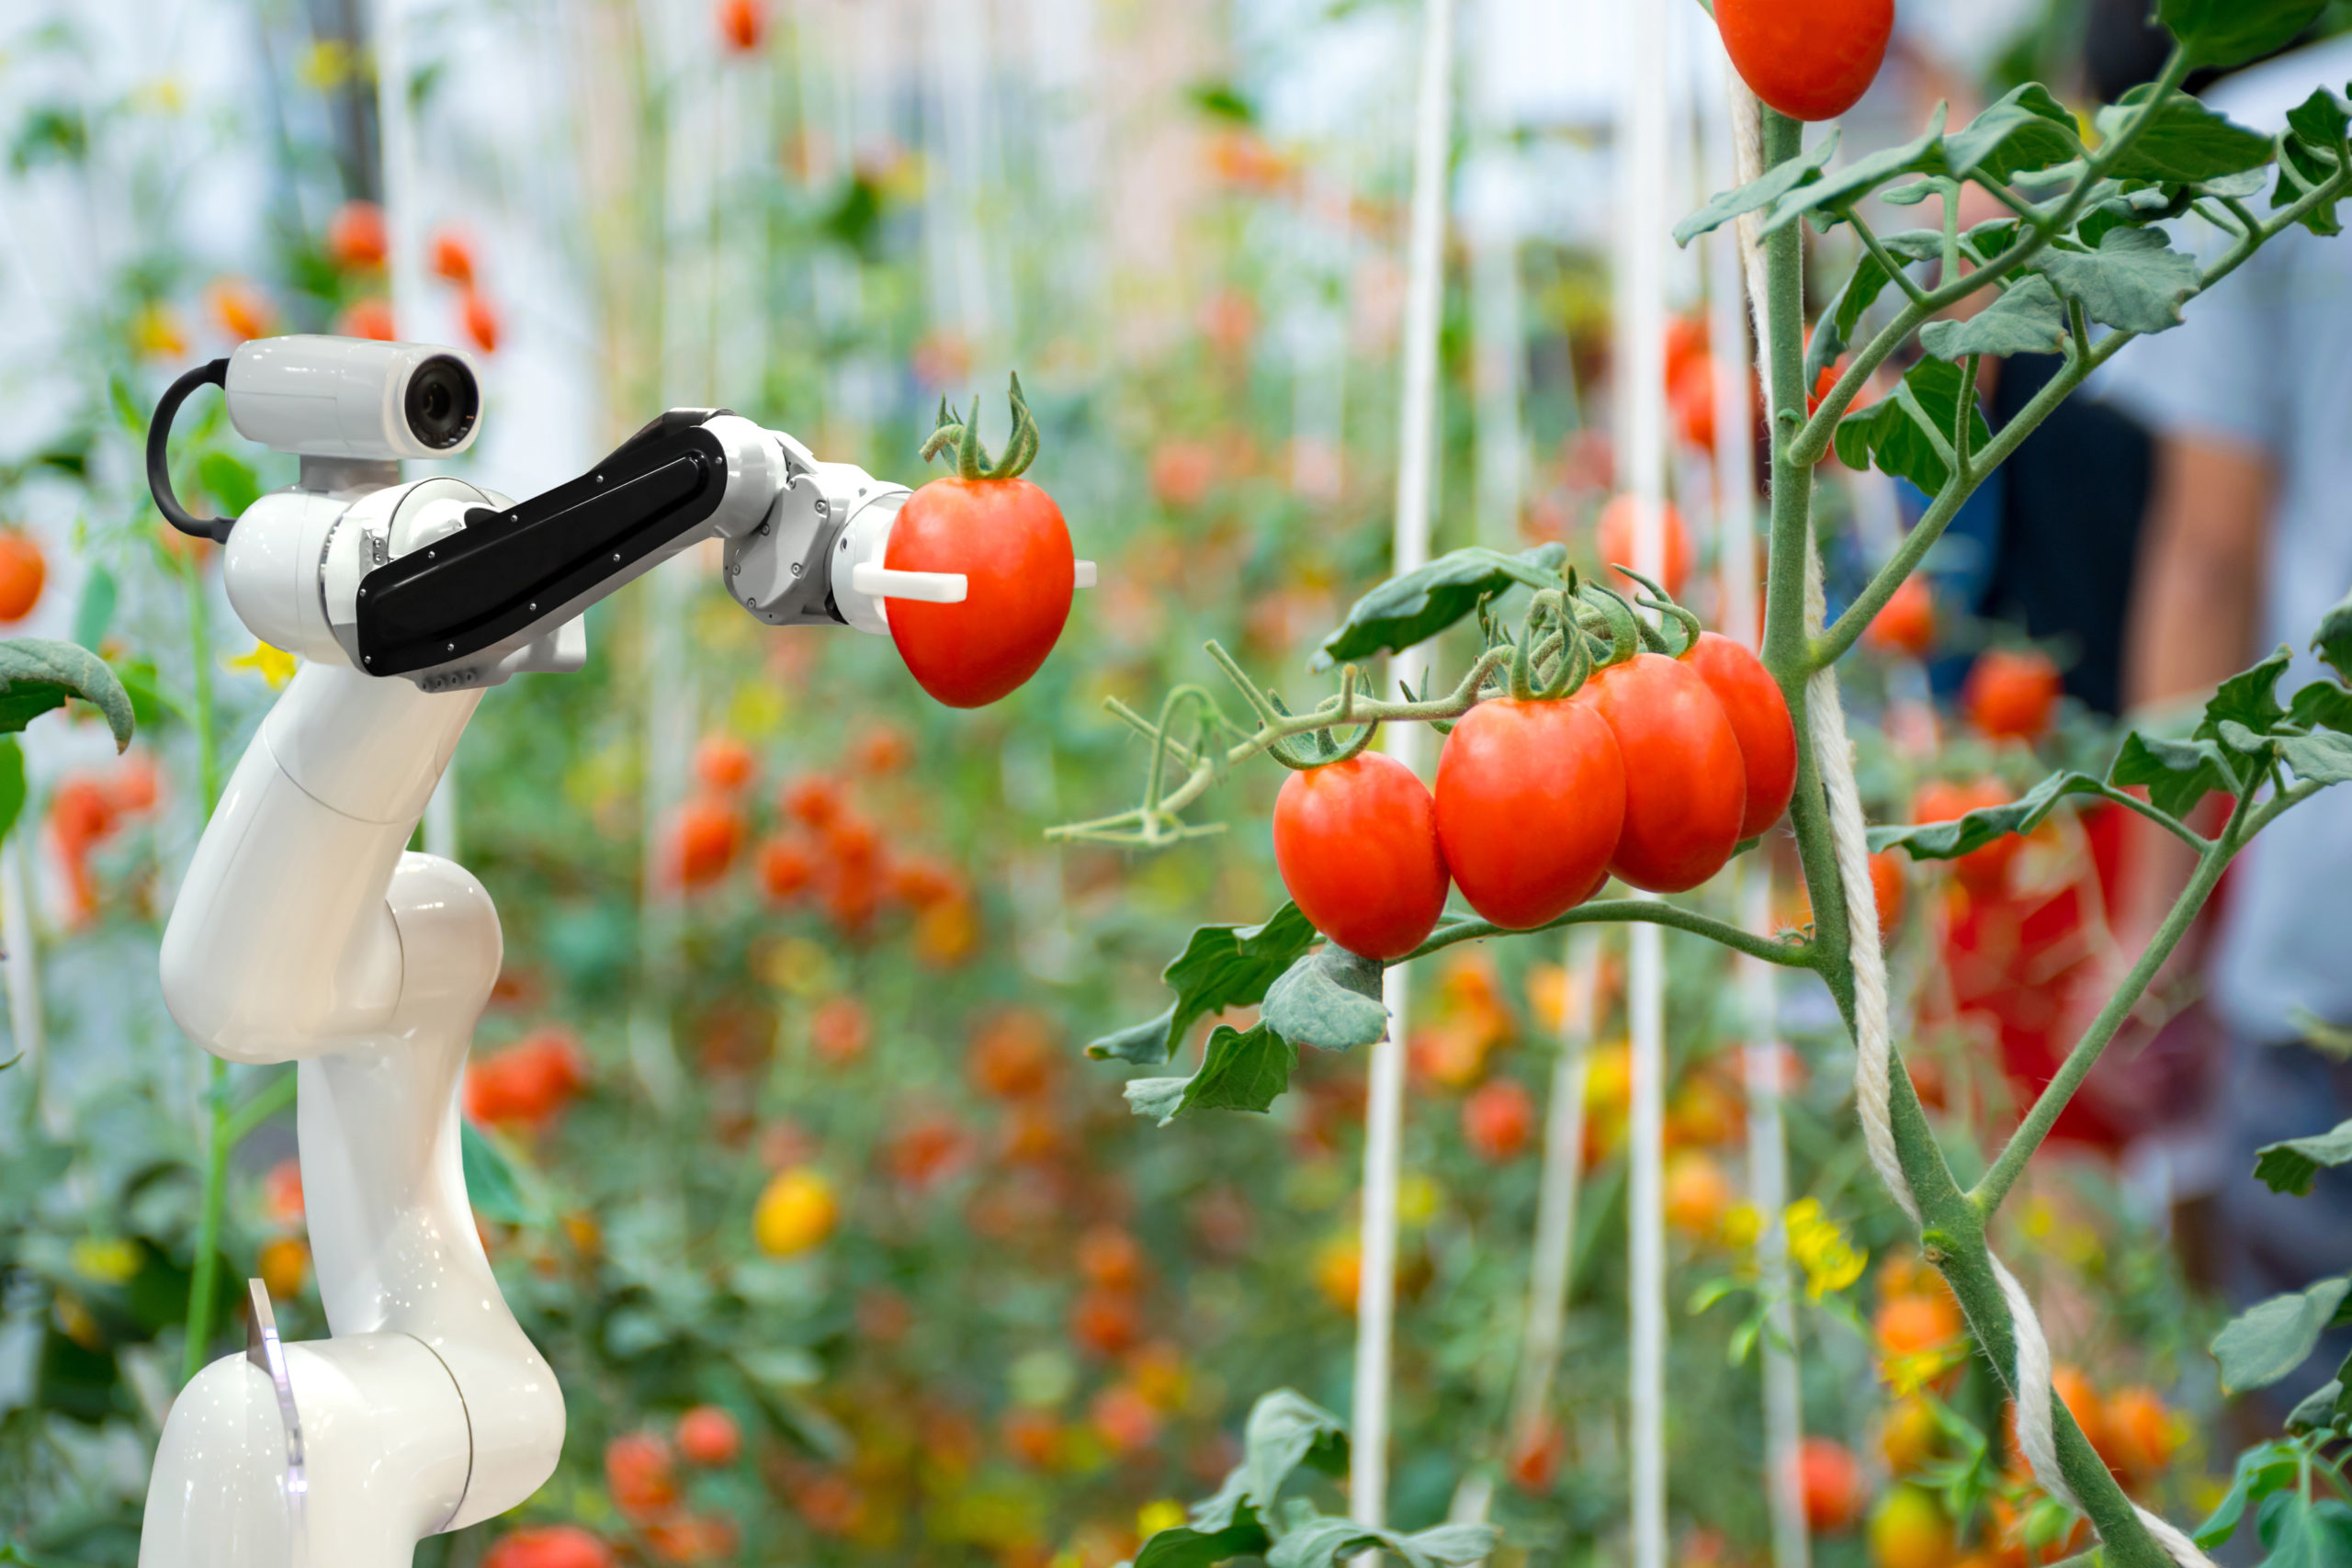 Smart robot picks tomatoes off the vine in an indoor growing center